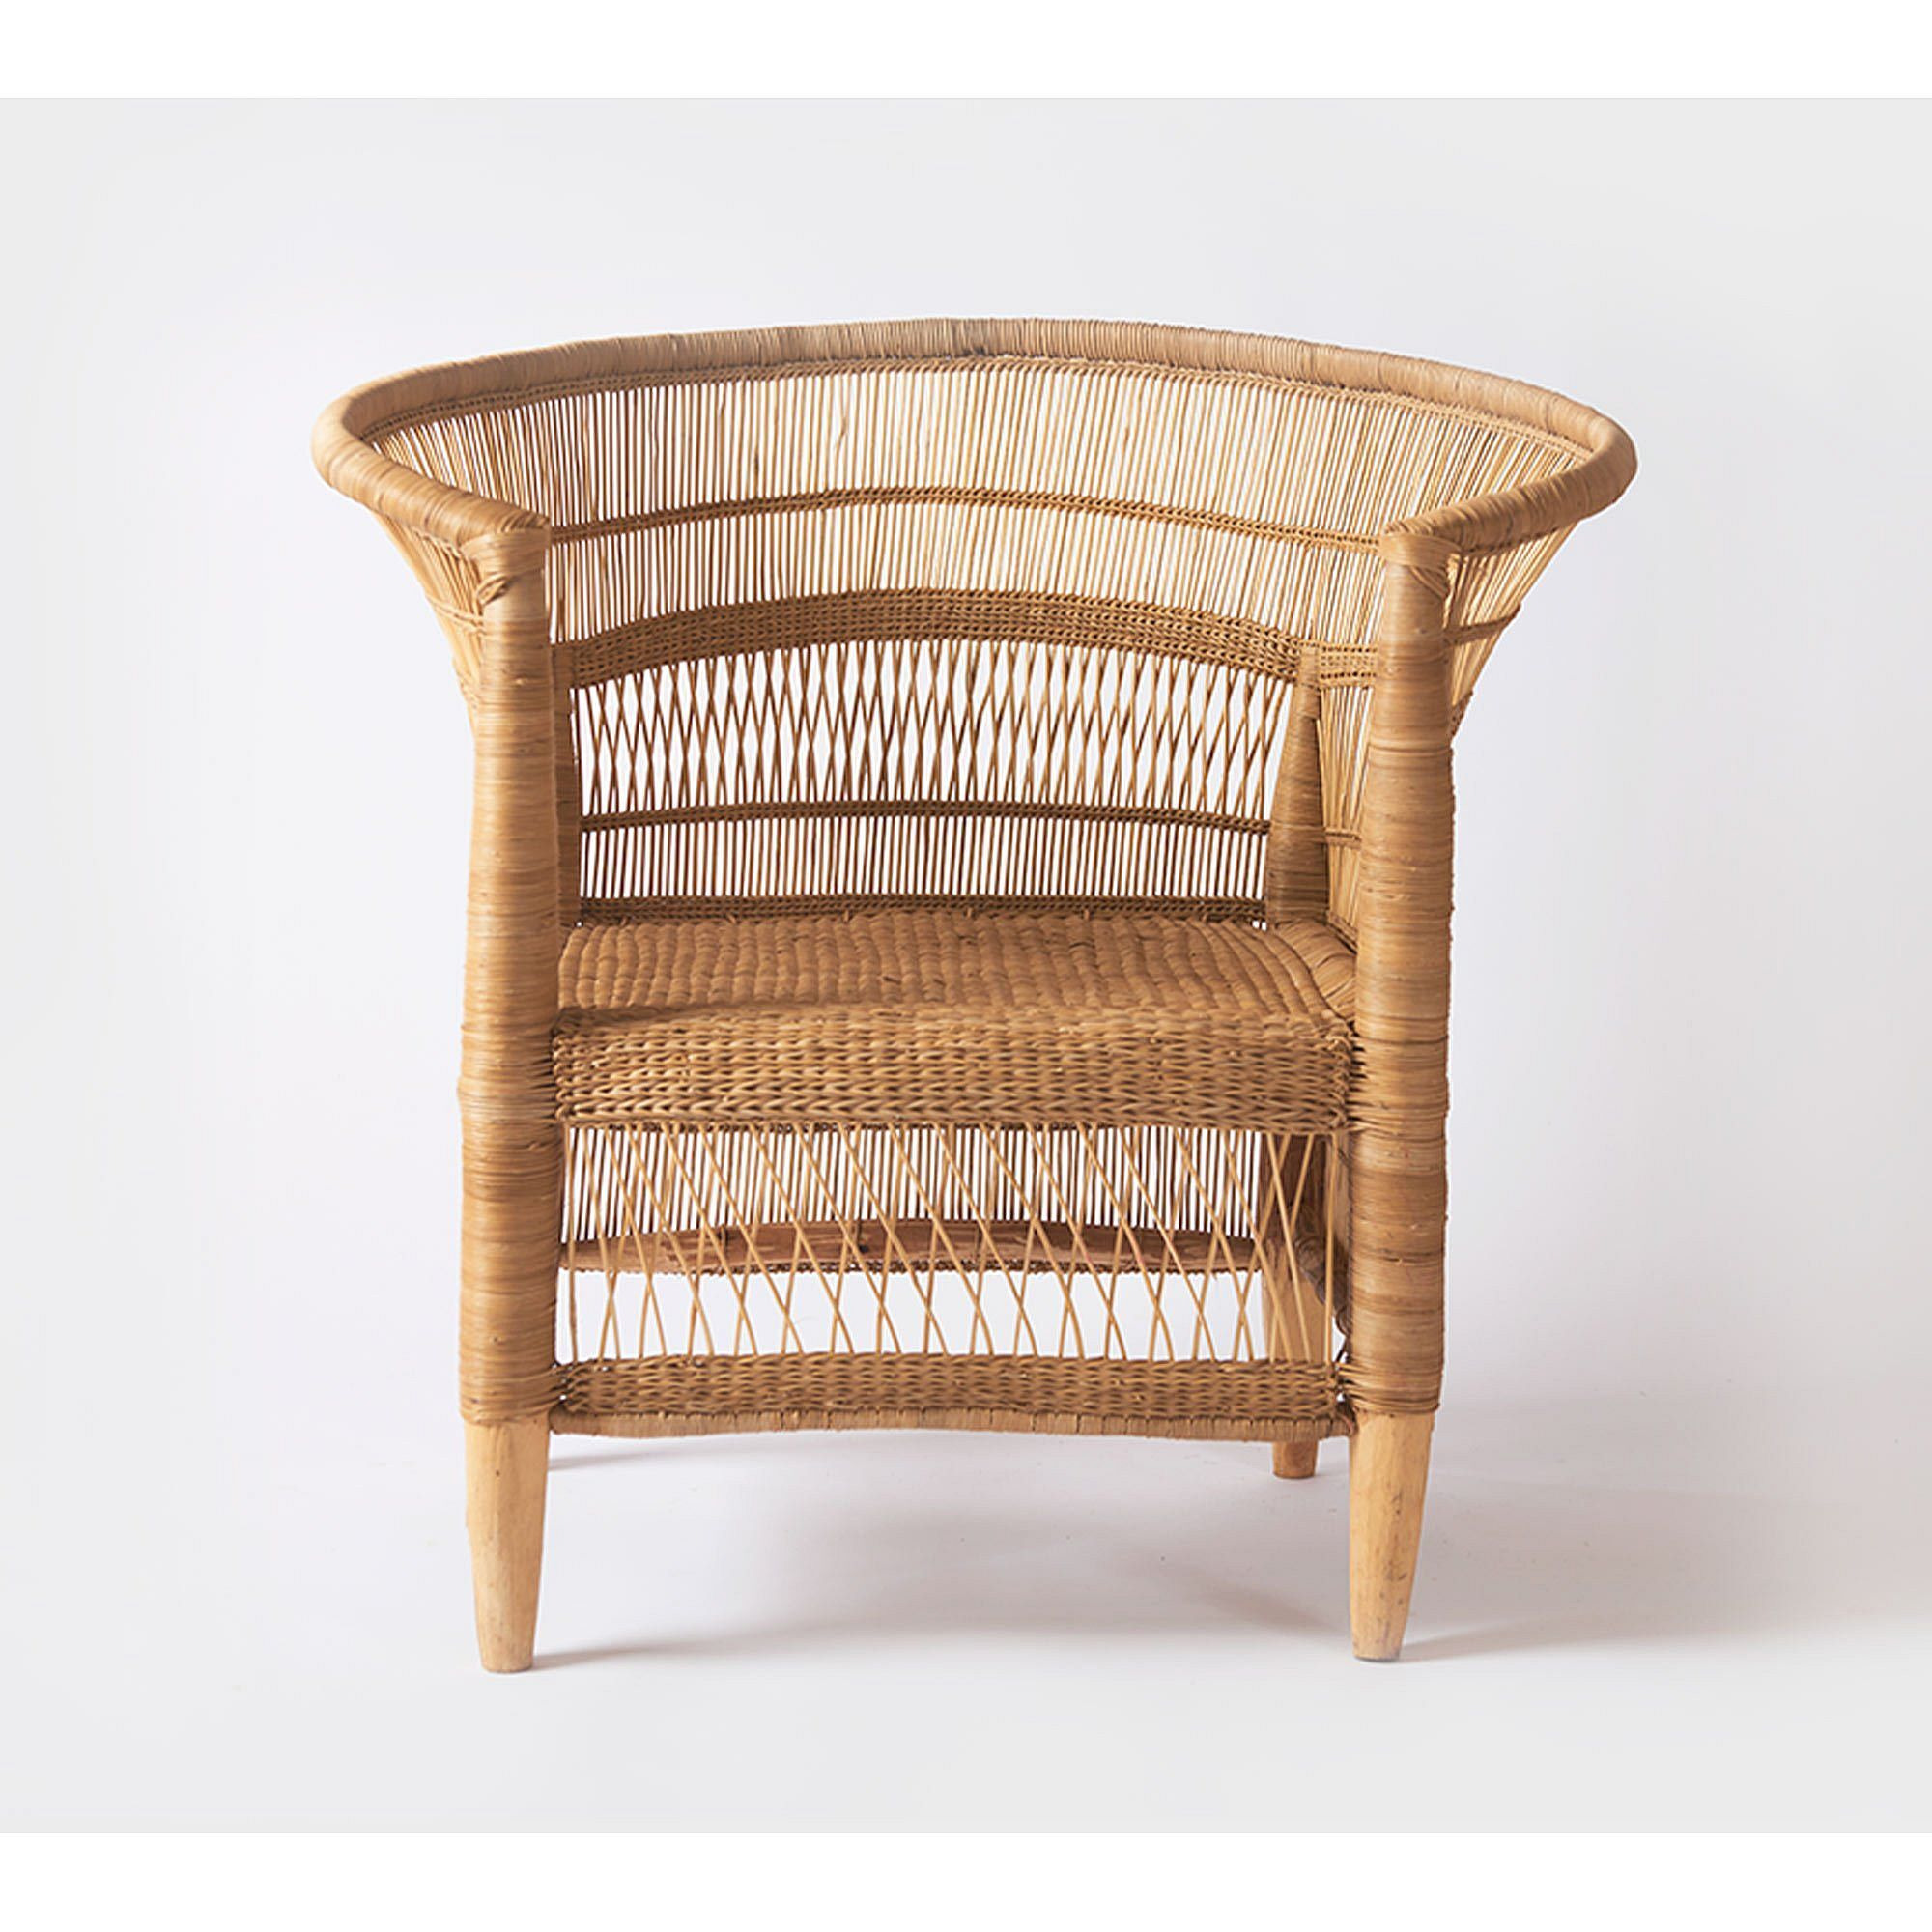 Kalibu Natural Rattan Chair - image 1